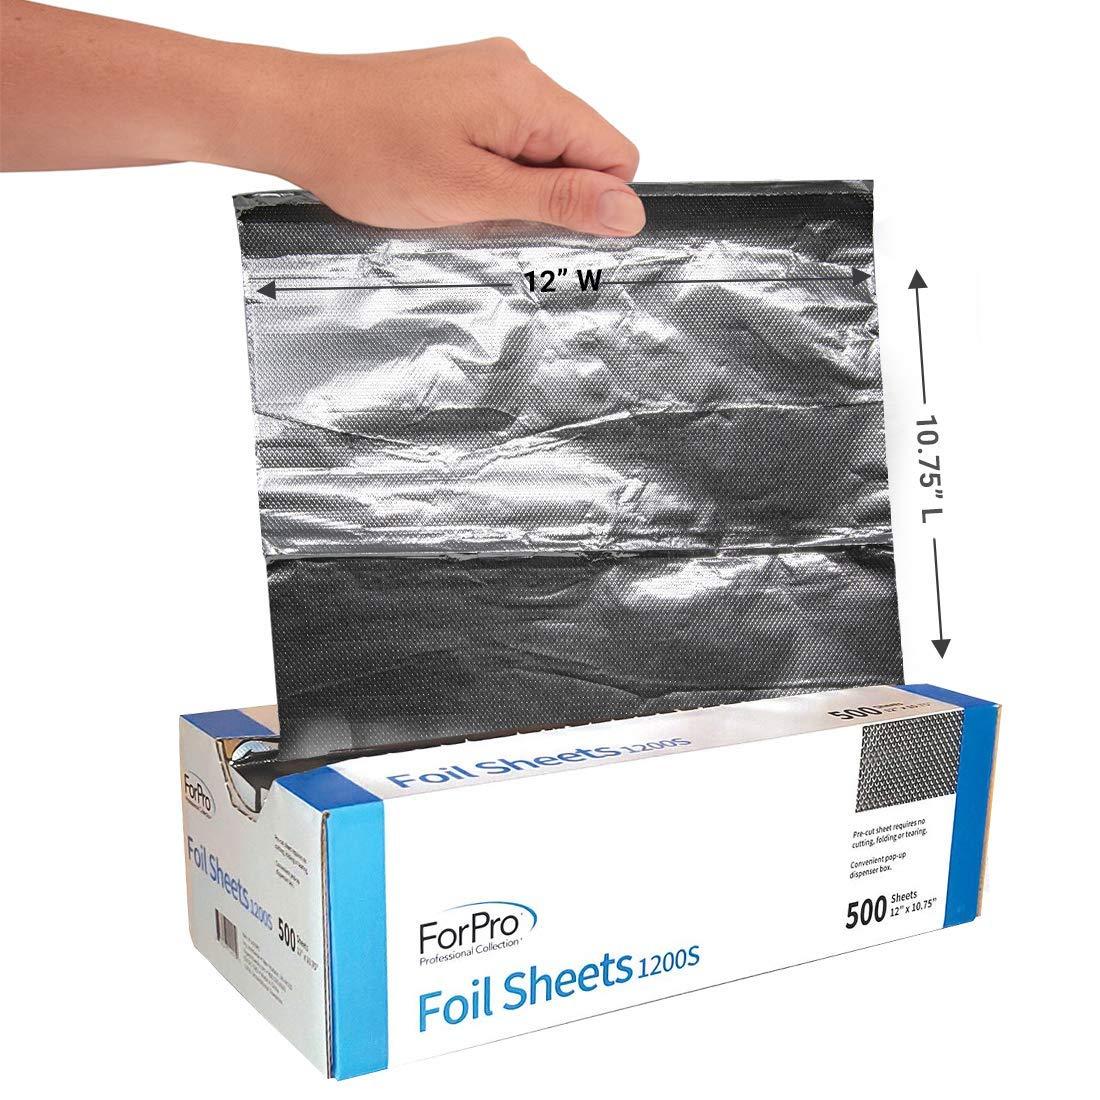 ForPro Embossed Foil Sheets 500S, Aluminum Foil, Pop-Up Foil Dispenser,  Hair Foils for Color Application and Highlighting Services, Food Safe, 5” W  x 10.75” L, 1000-Count 